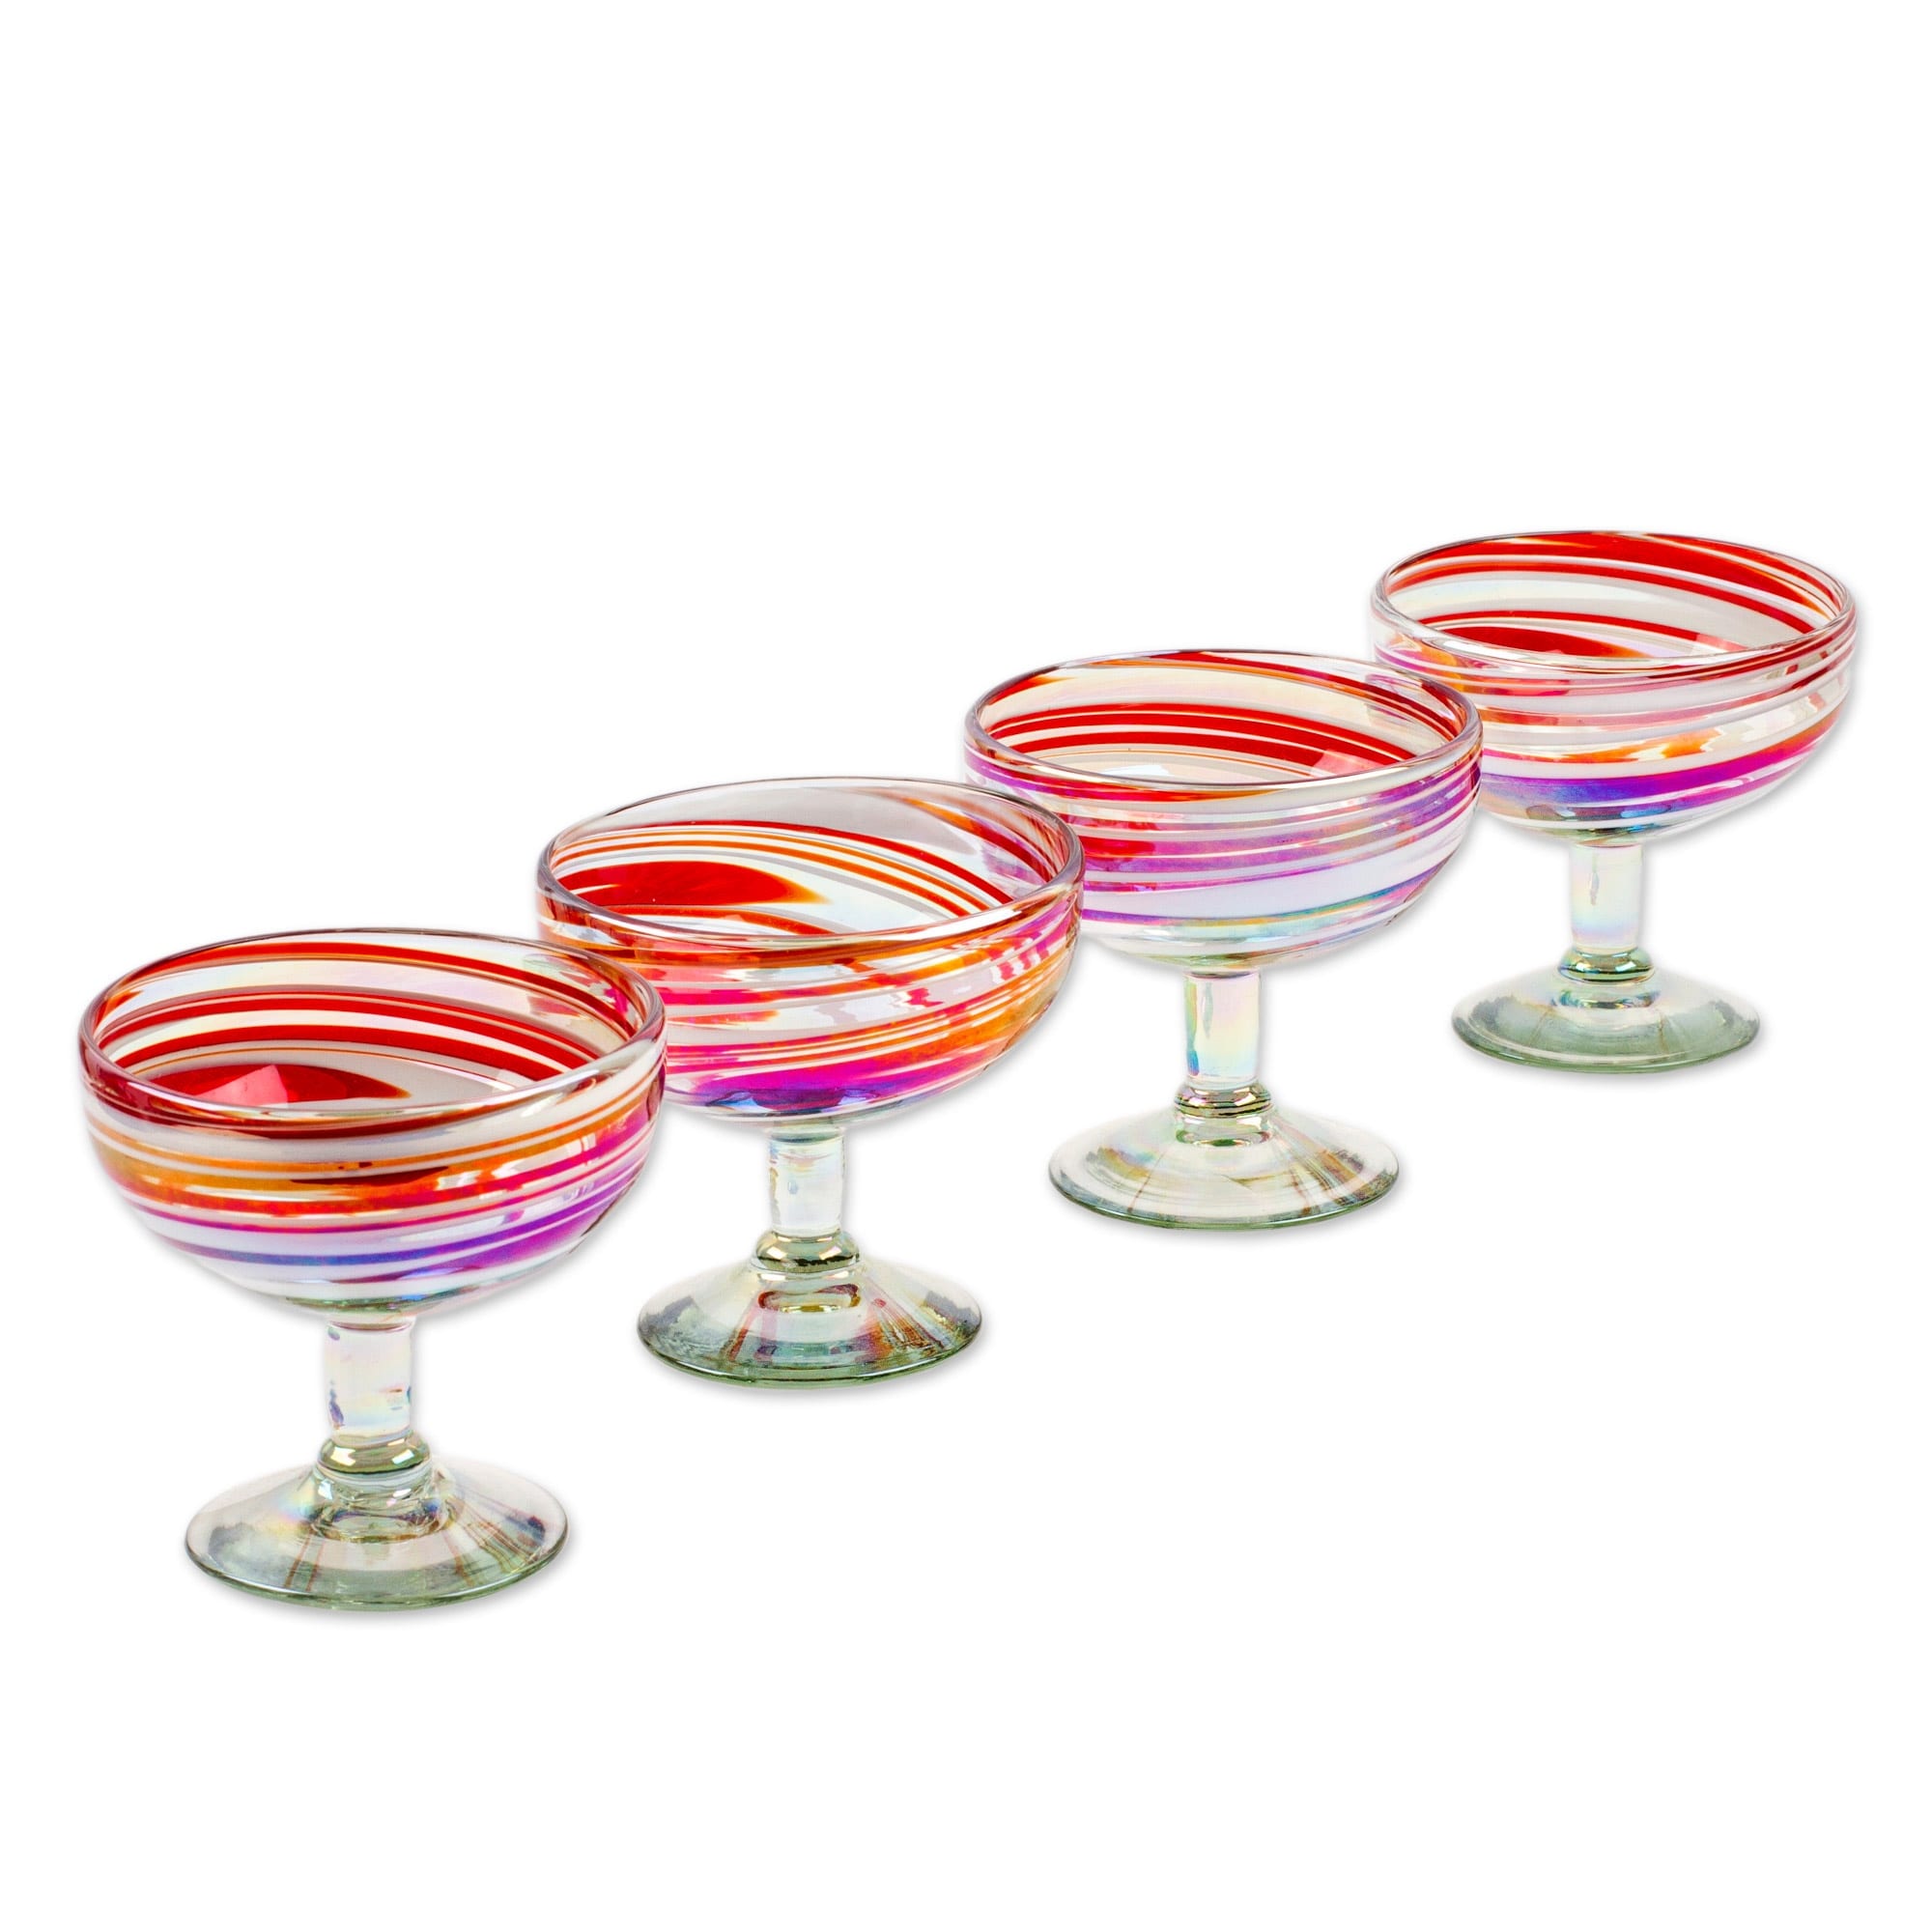 Set of 4 Hand Blown Amethyst Purple Stemless Martini Glasses 12oz Tumblers